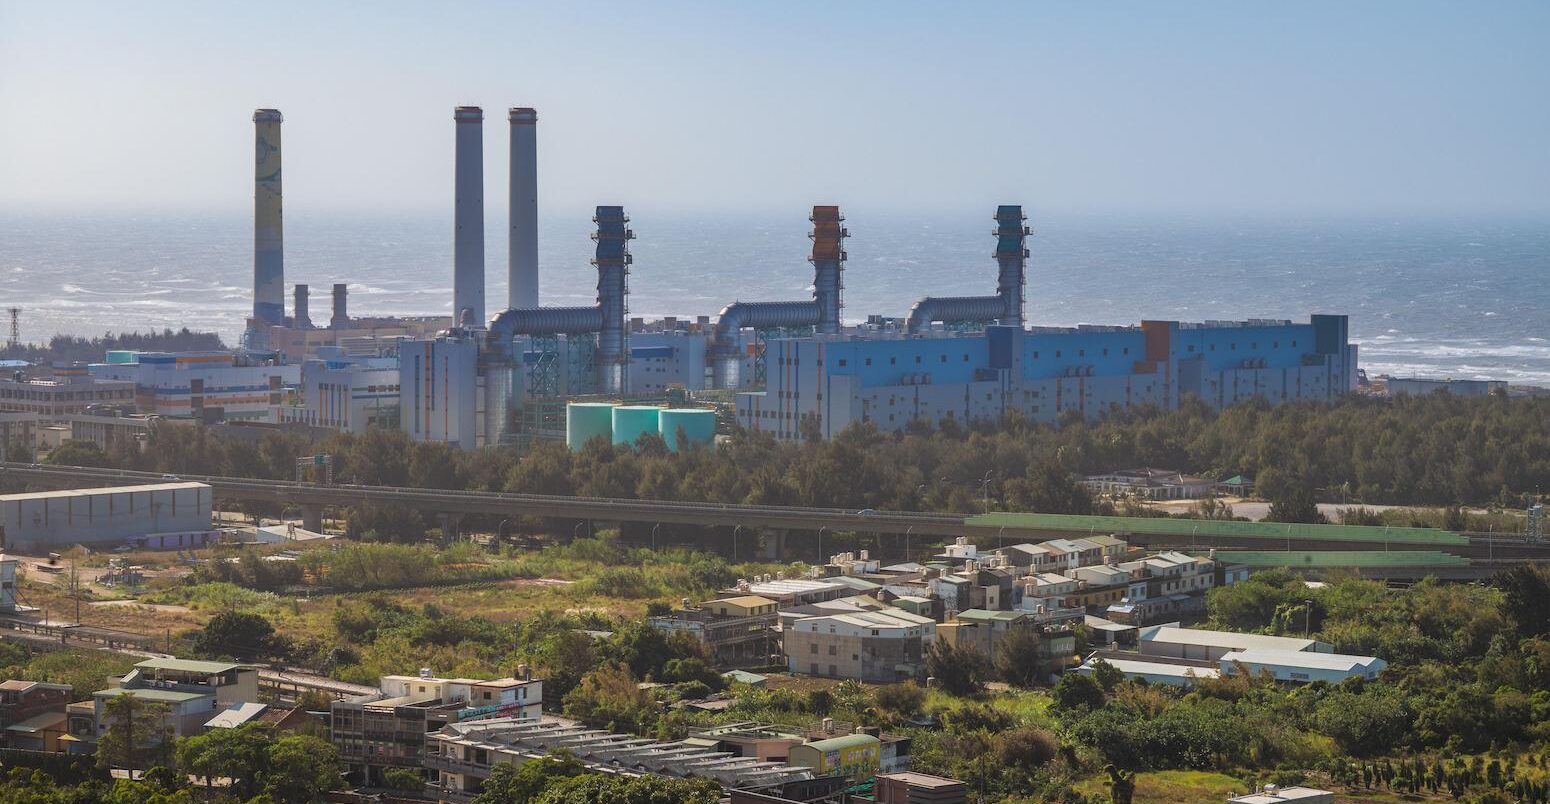 Tunghsiao Power Plant, a gas fired power plant in Miaoli, Taiwan.